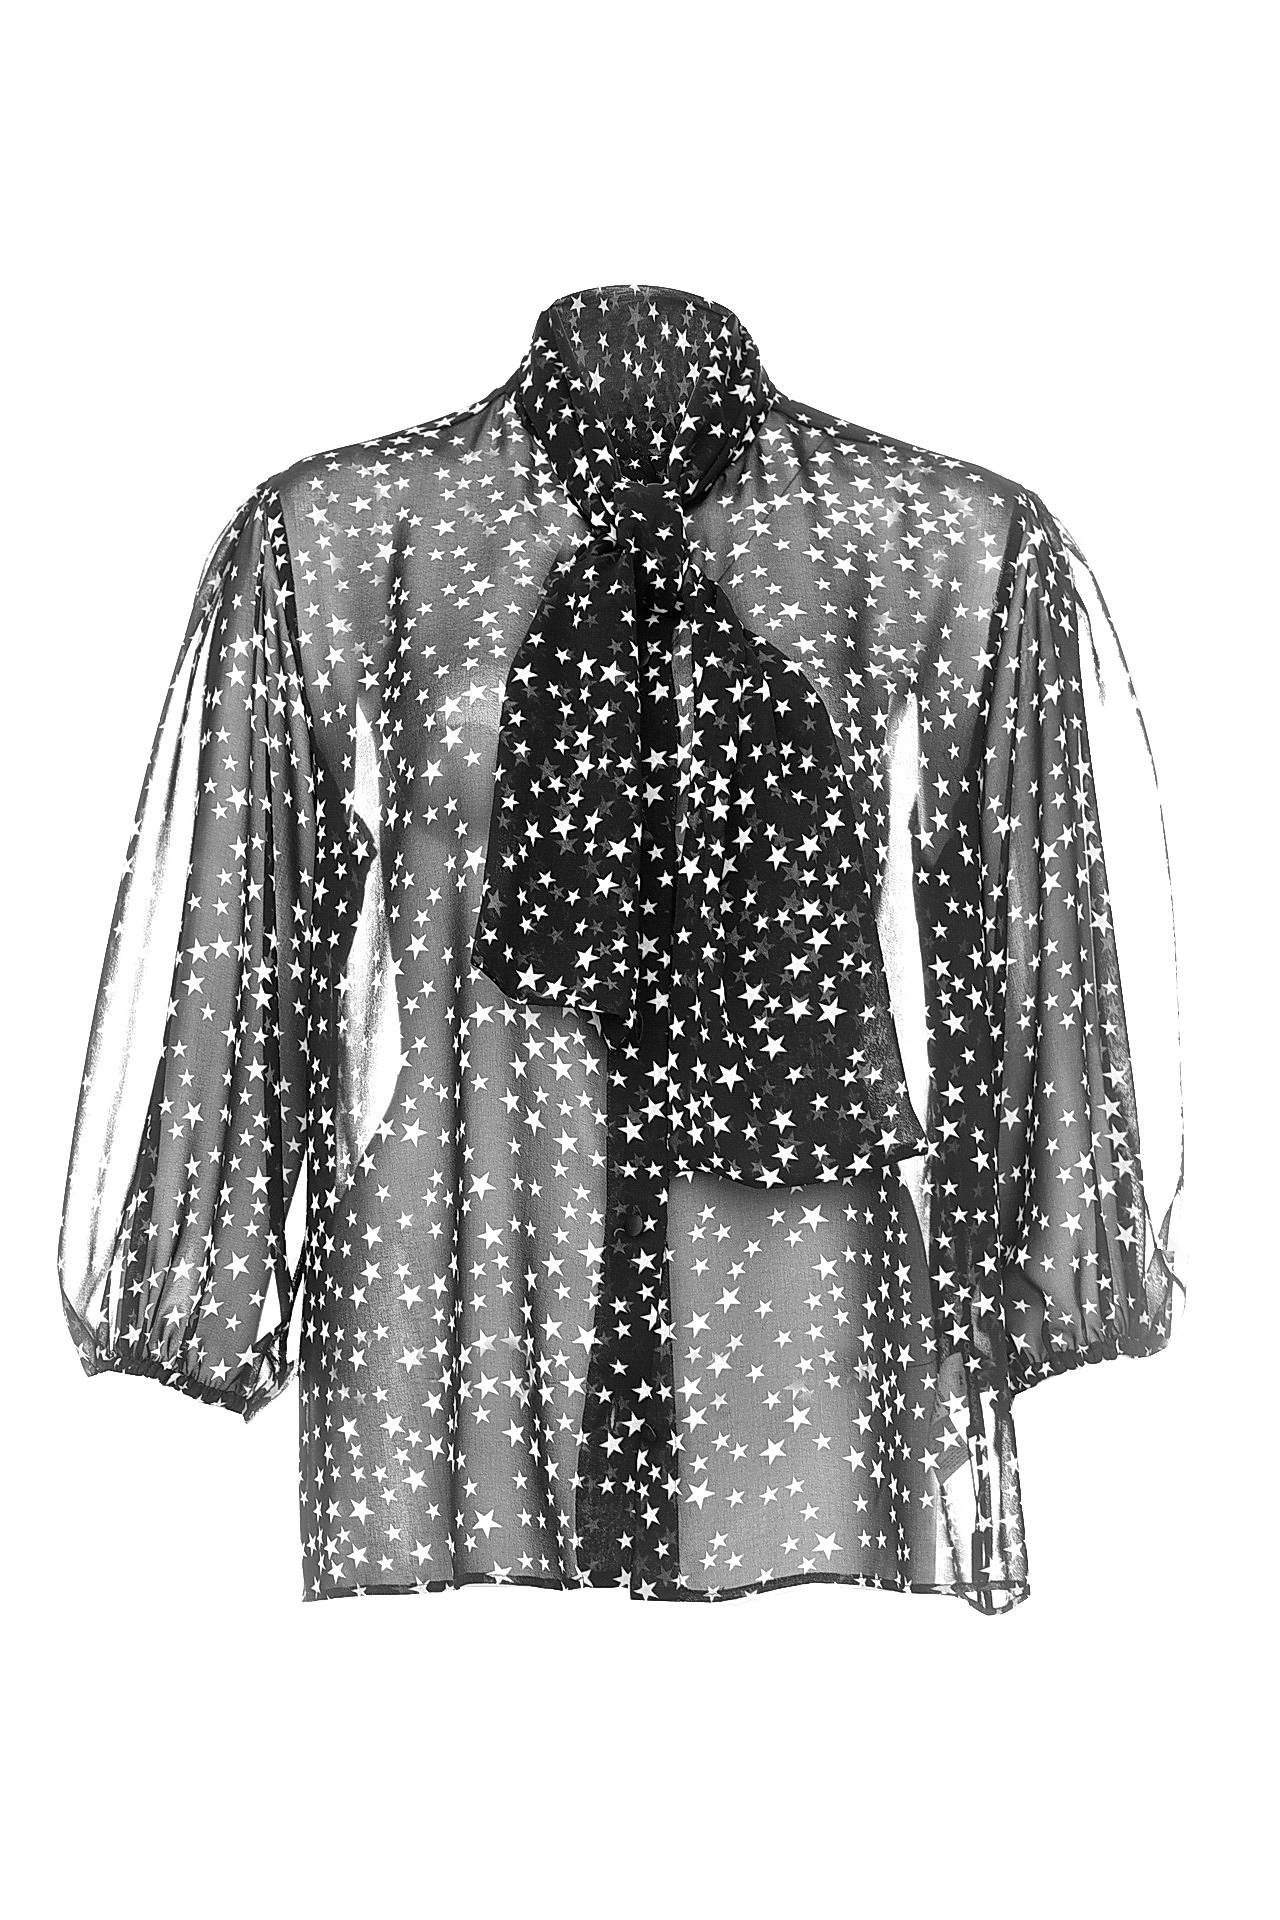 Одежда женская Блузка DOLCE & GABBANA (HQ0214GXXXX/16.02). Купить за 19950 руб.